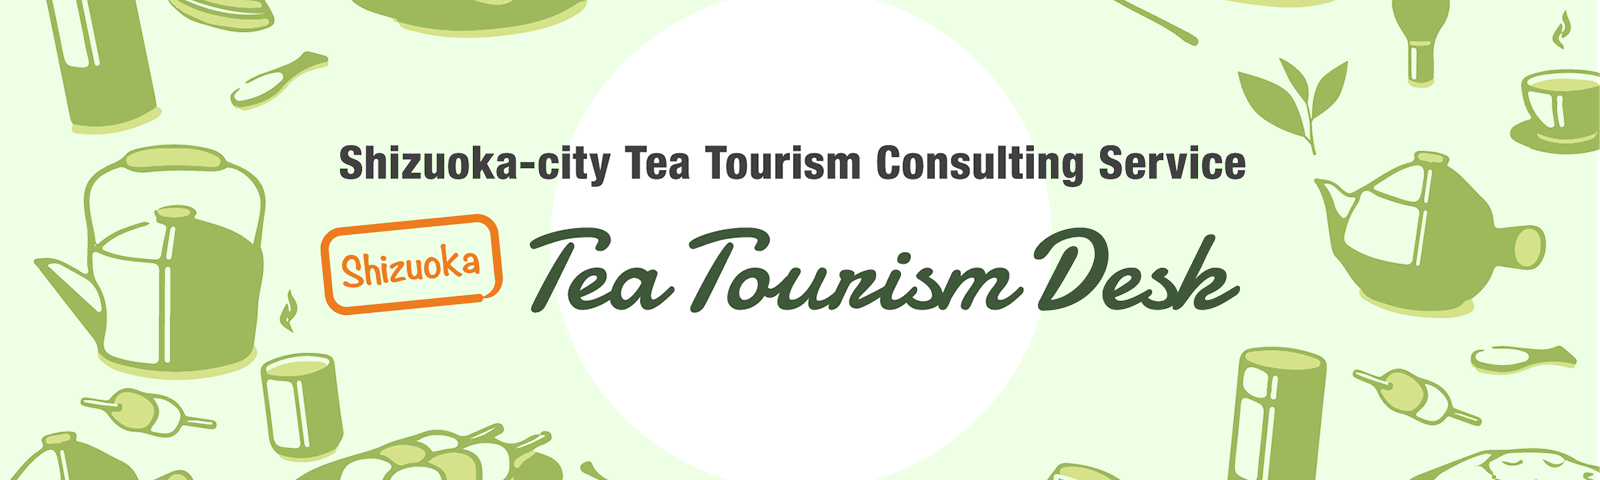 Private reception of the tea experience and consultation Shizuoka tea tour desk